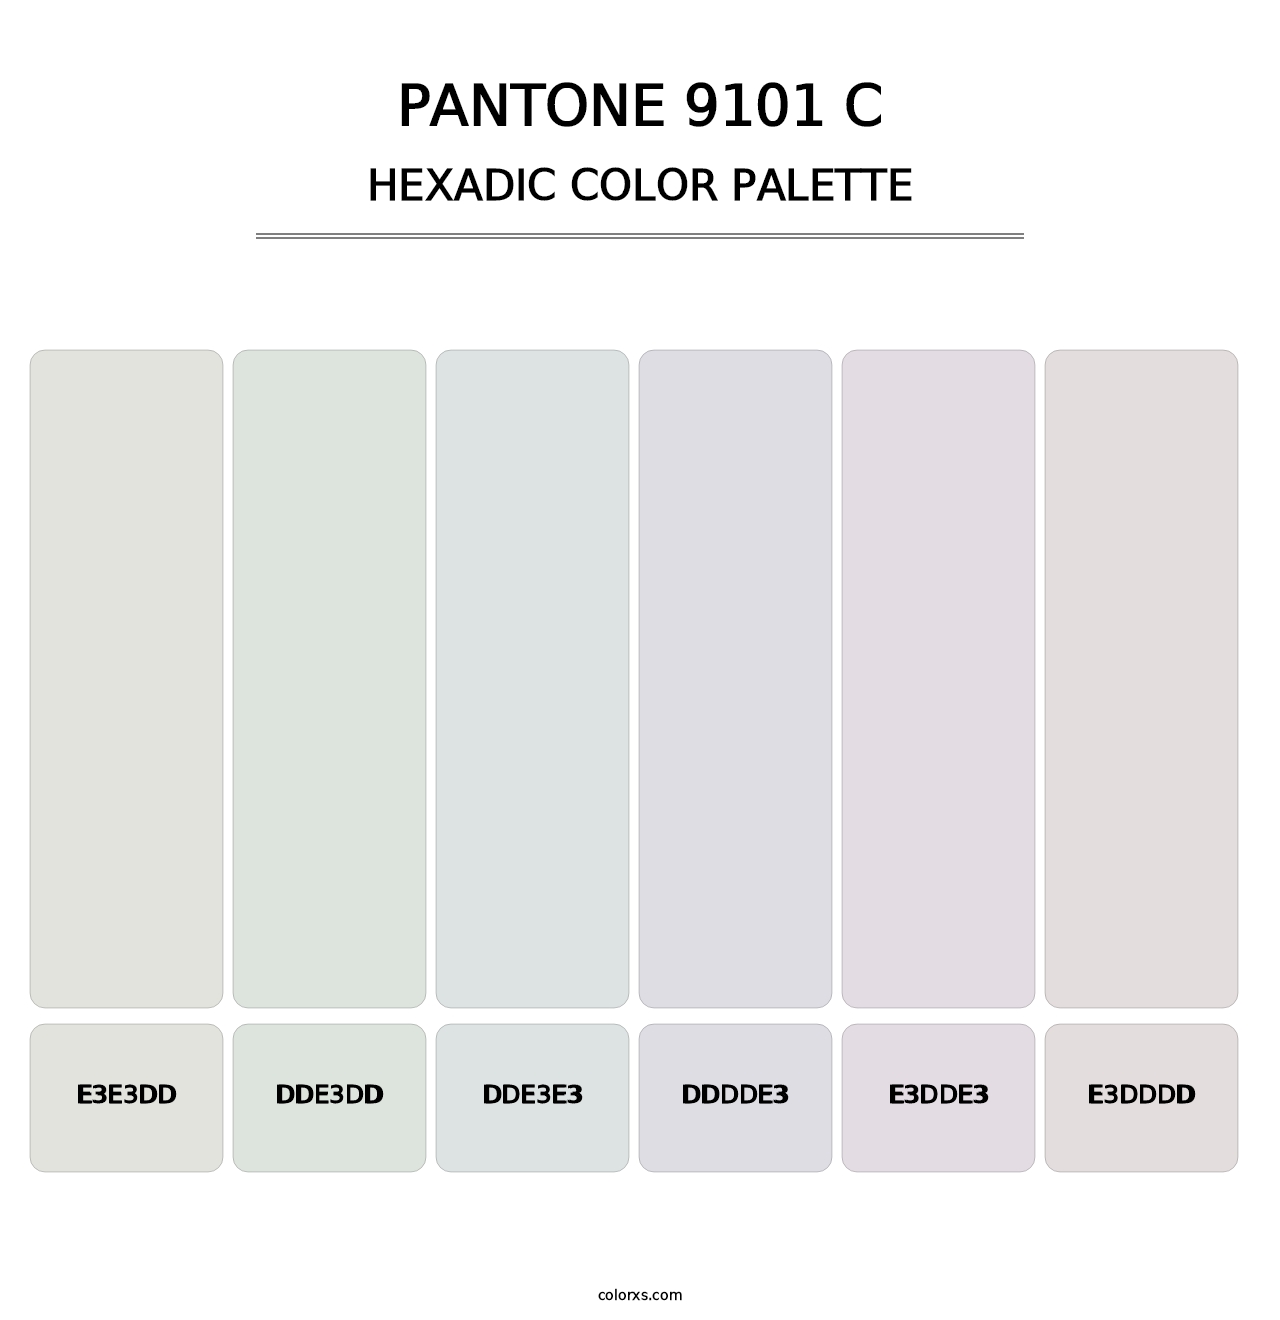 PANTONE 9101 C - Hexadic Color Palette